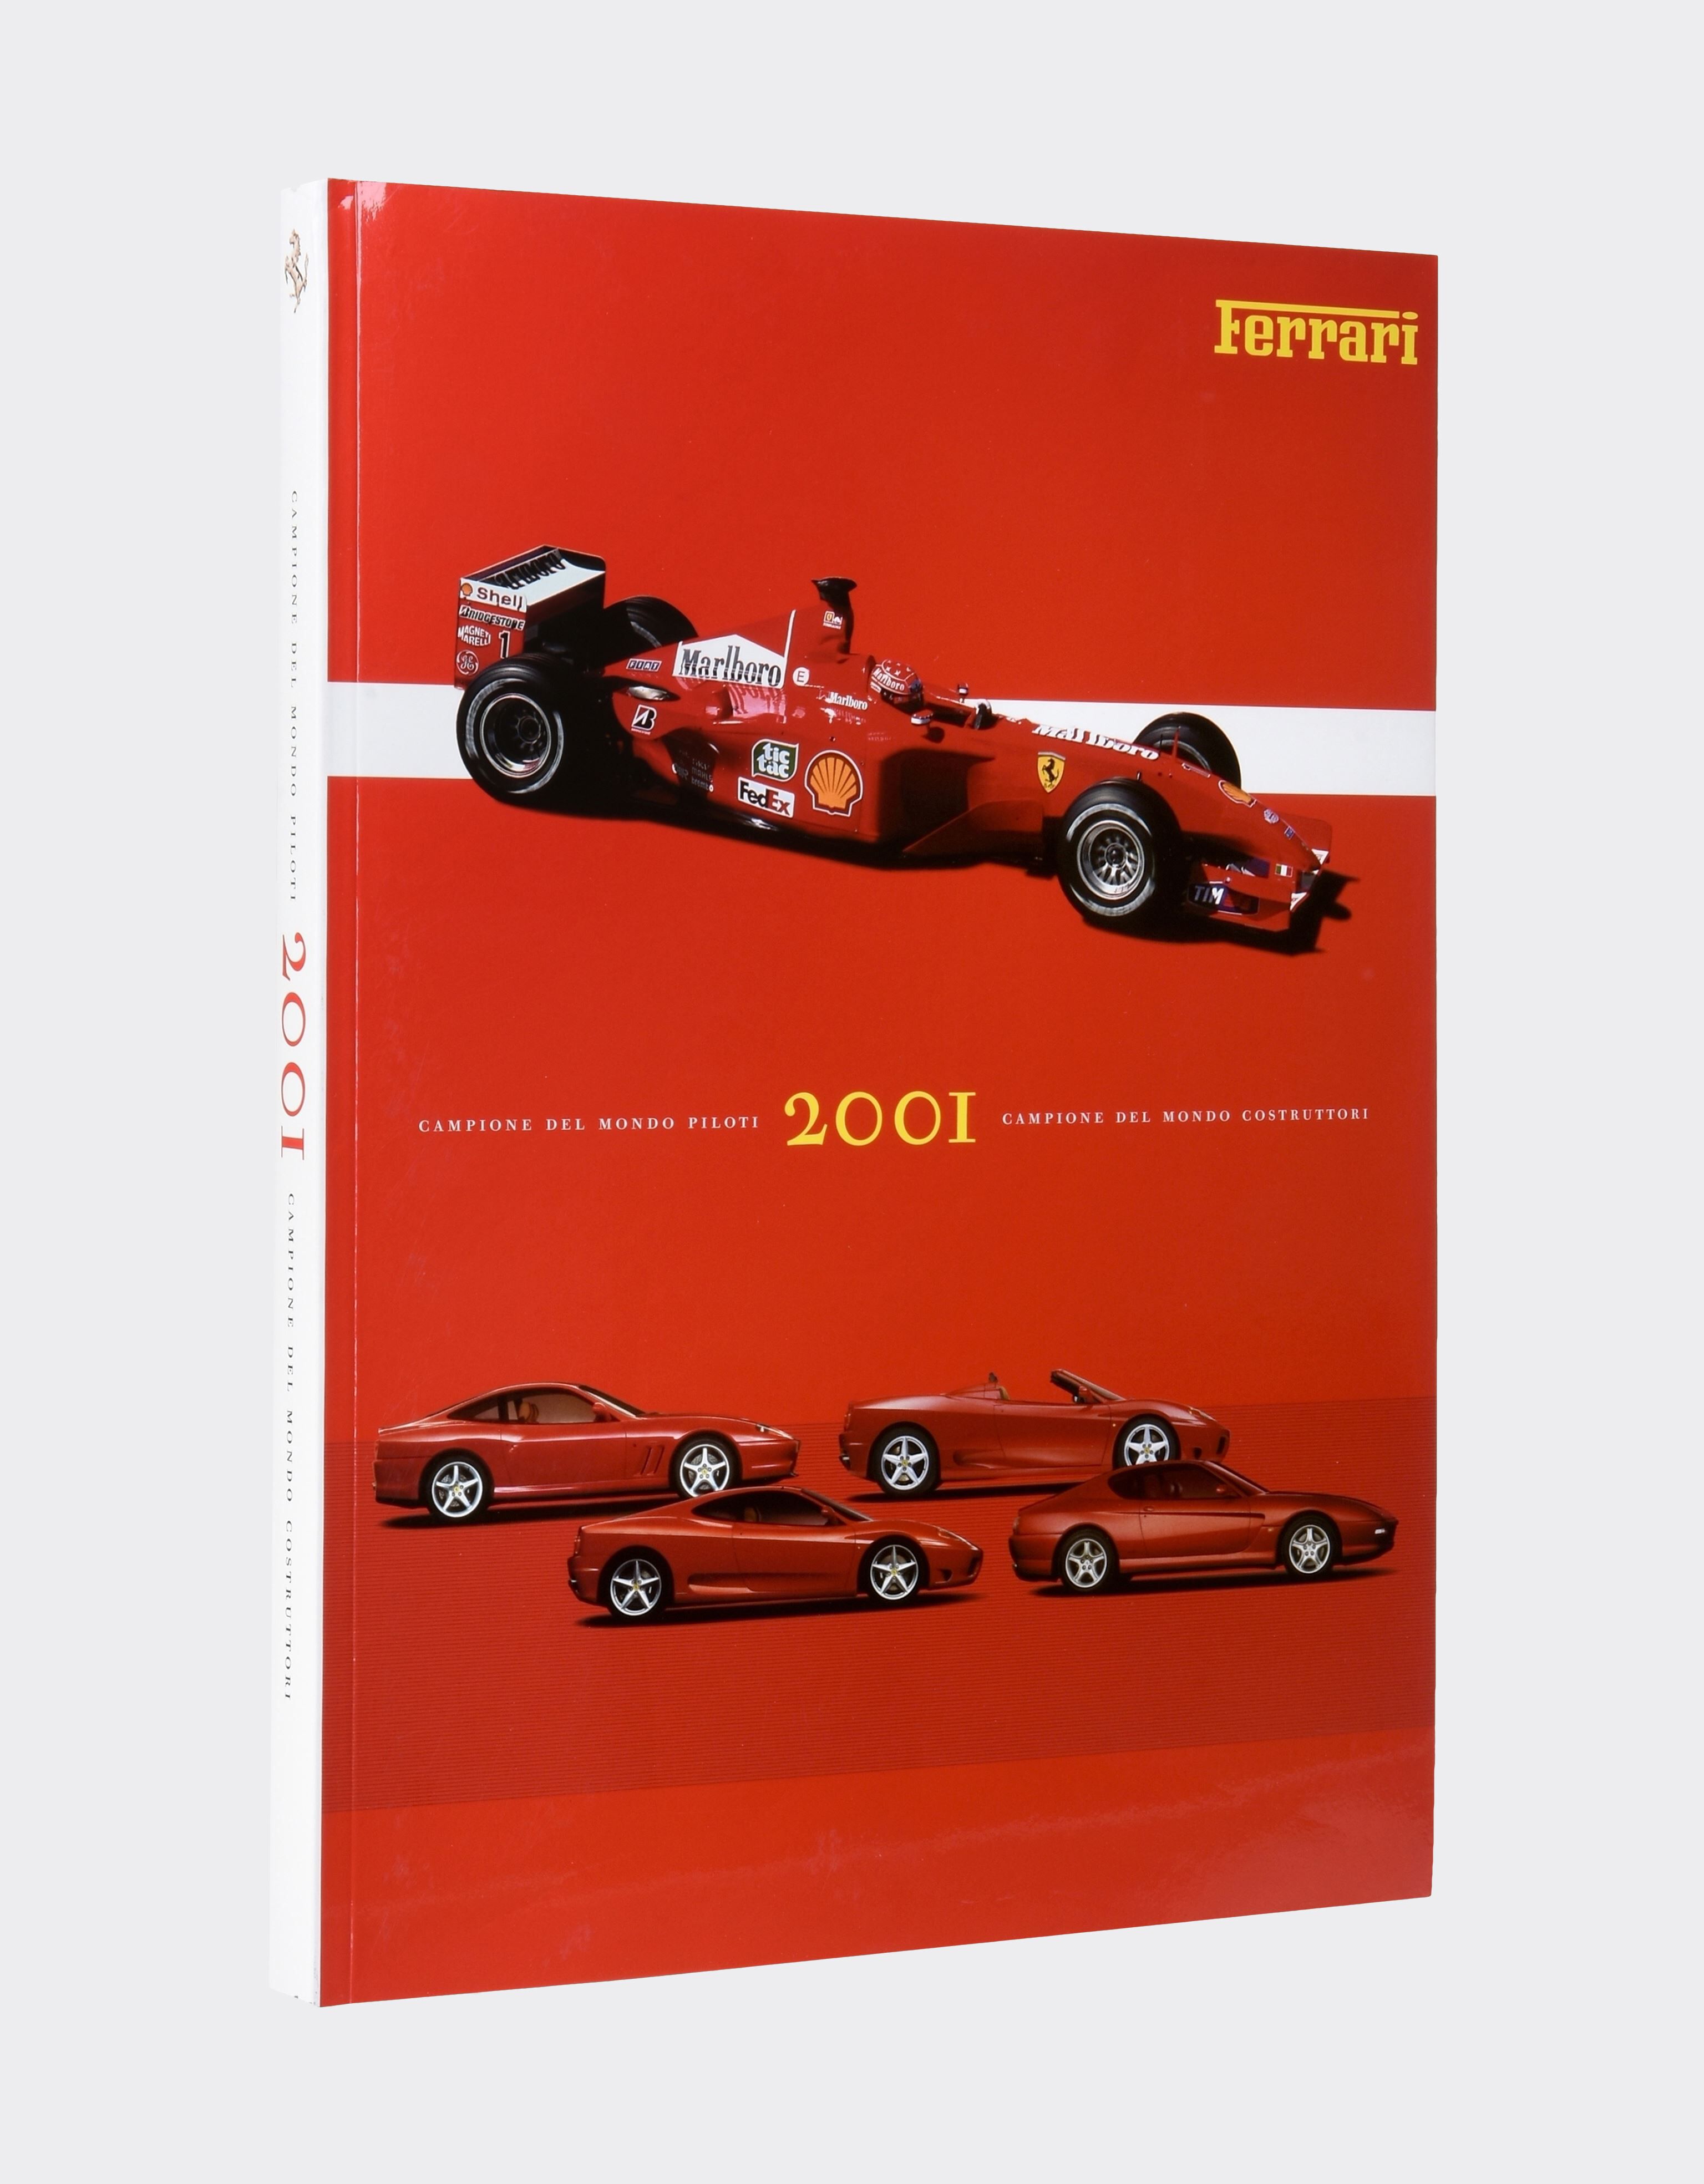 Ferrari Ferrari 2001 Yearbook 多色 00619f